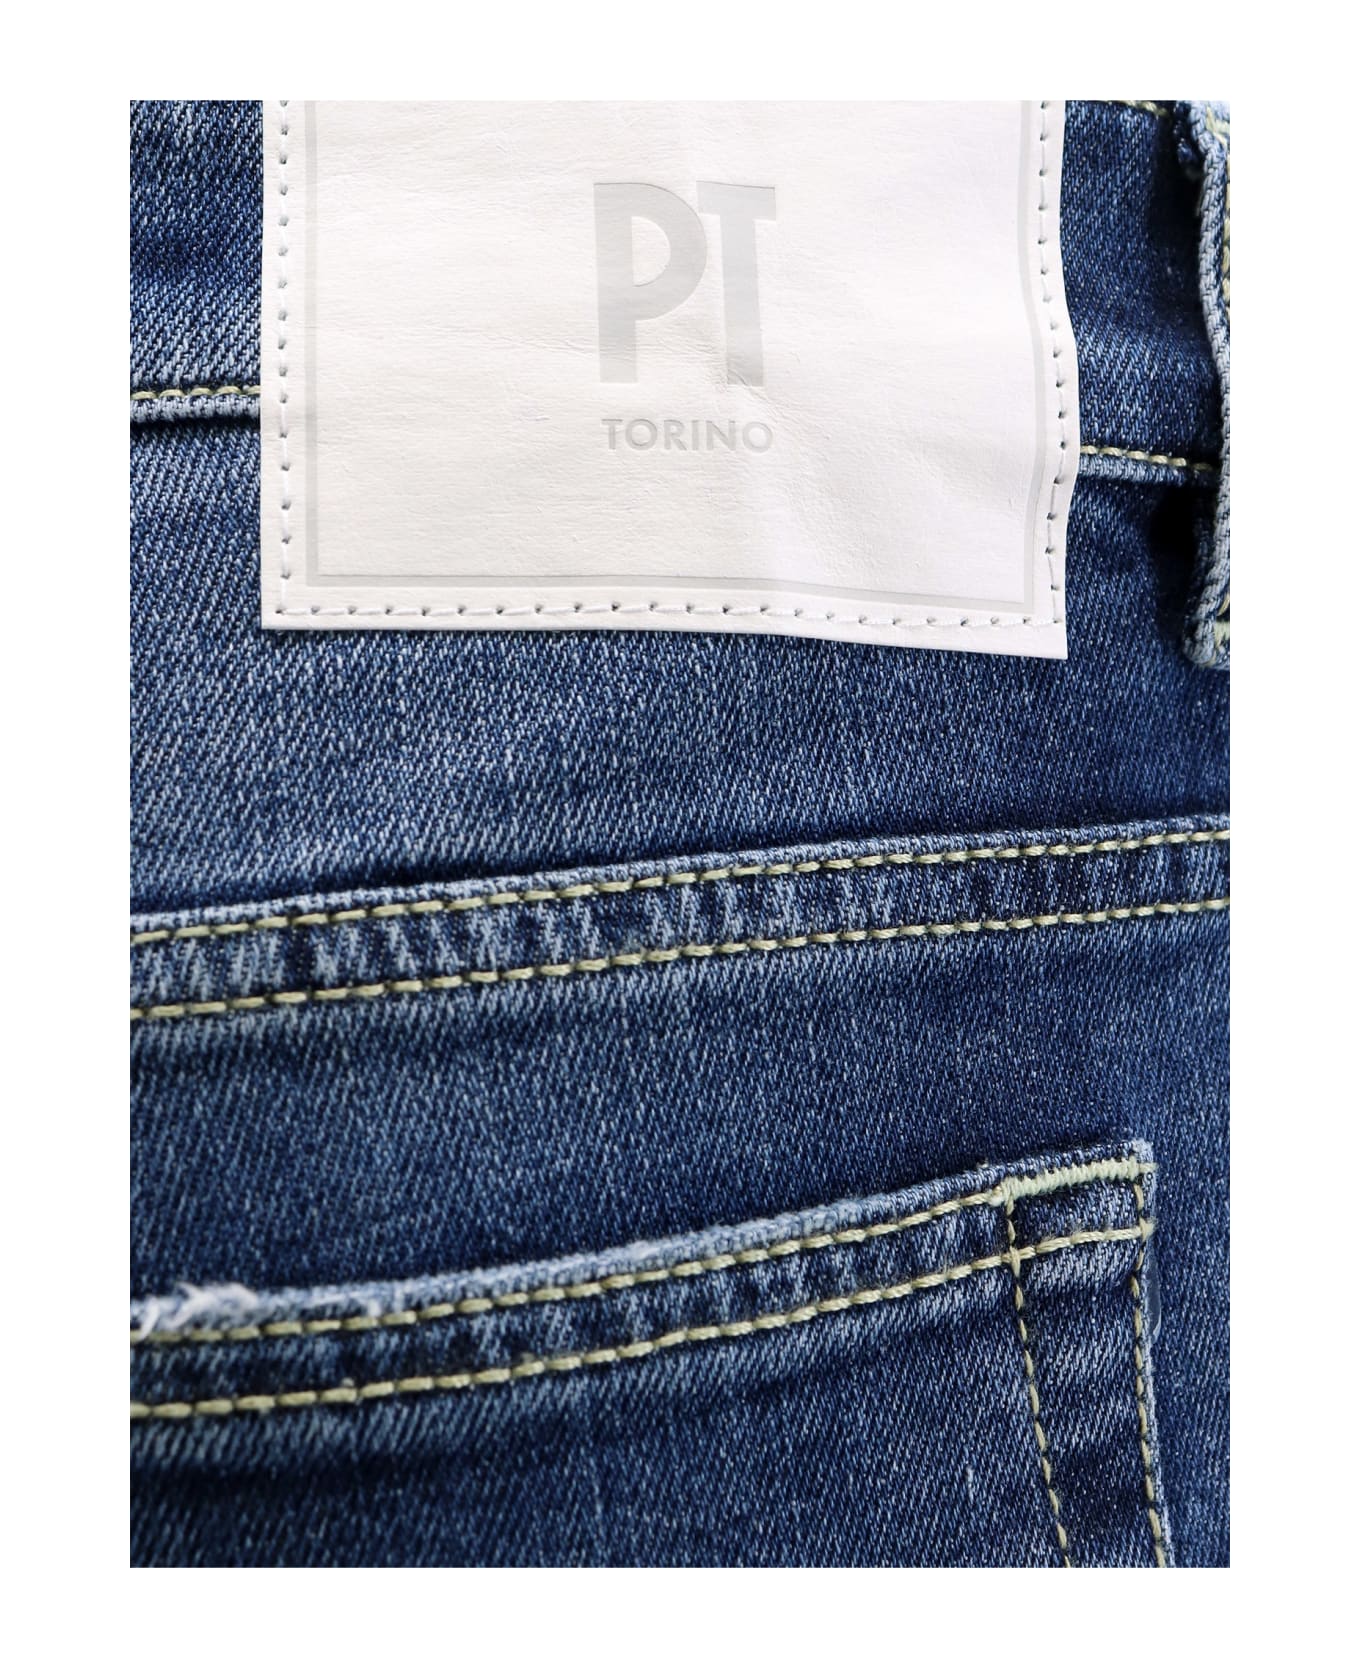 PT Torino Jeans デニム